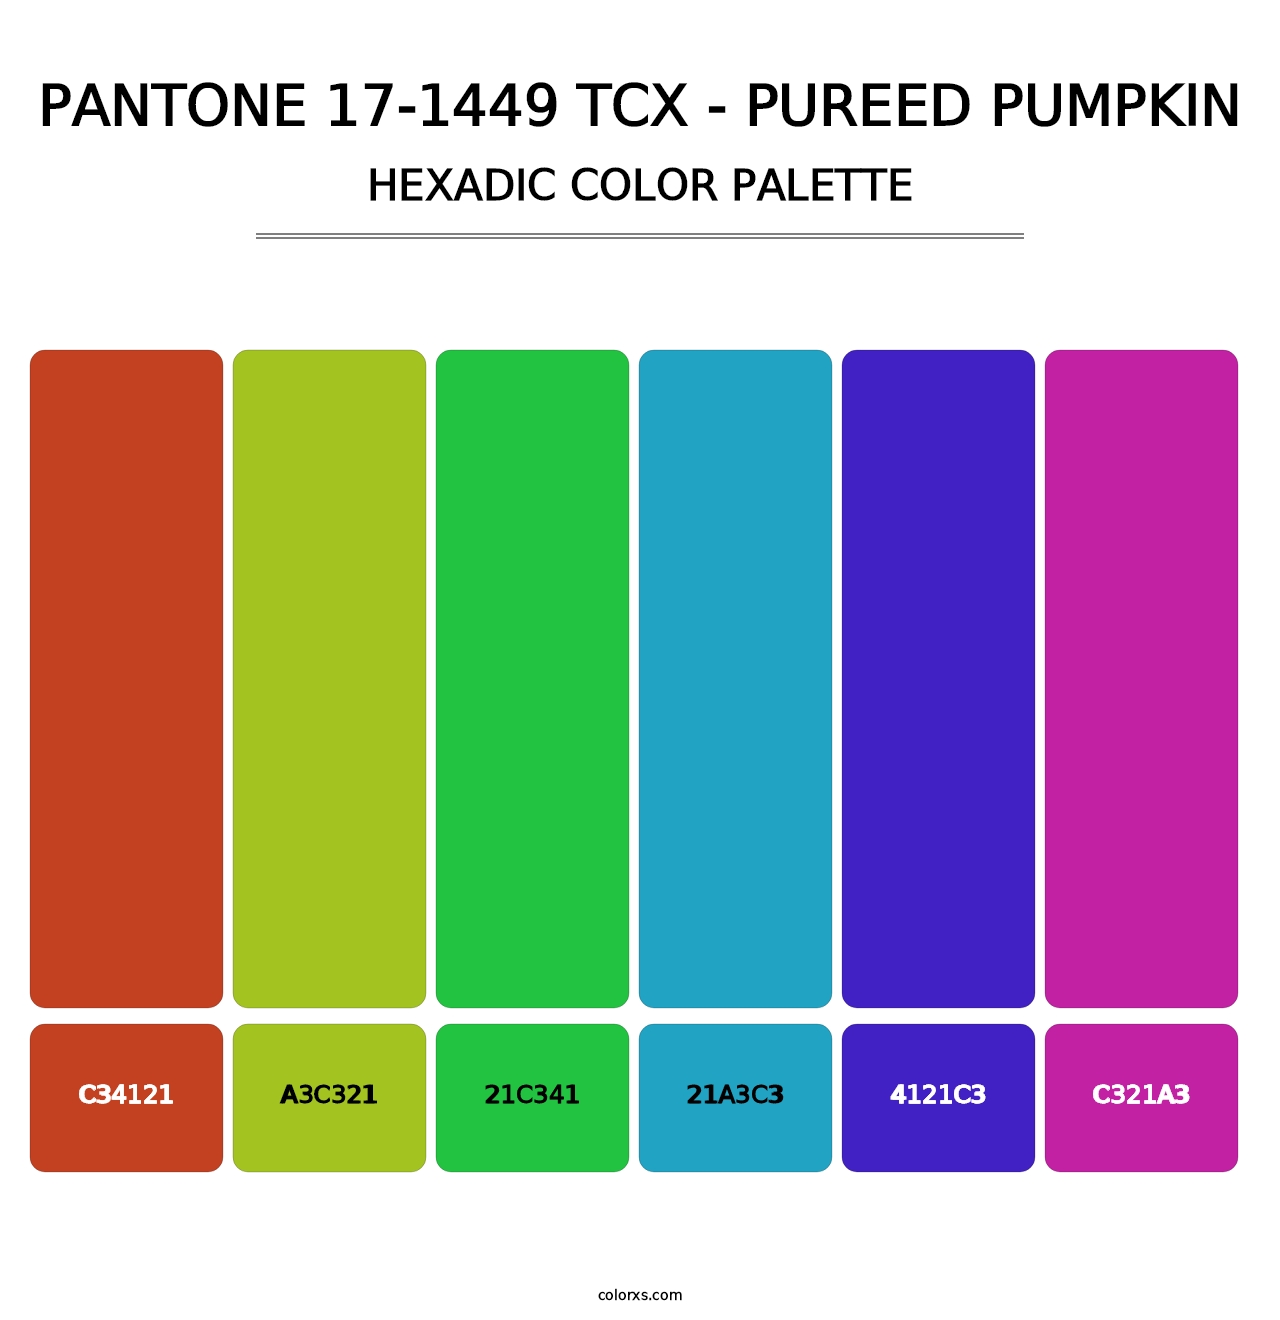 PANTONE 17-1449 TCX - Pureed Pumpkin - Hexadic Color Palette